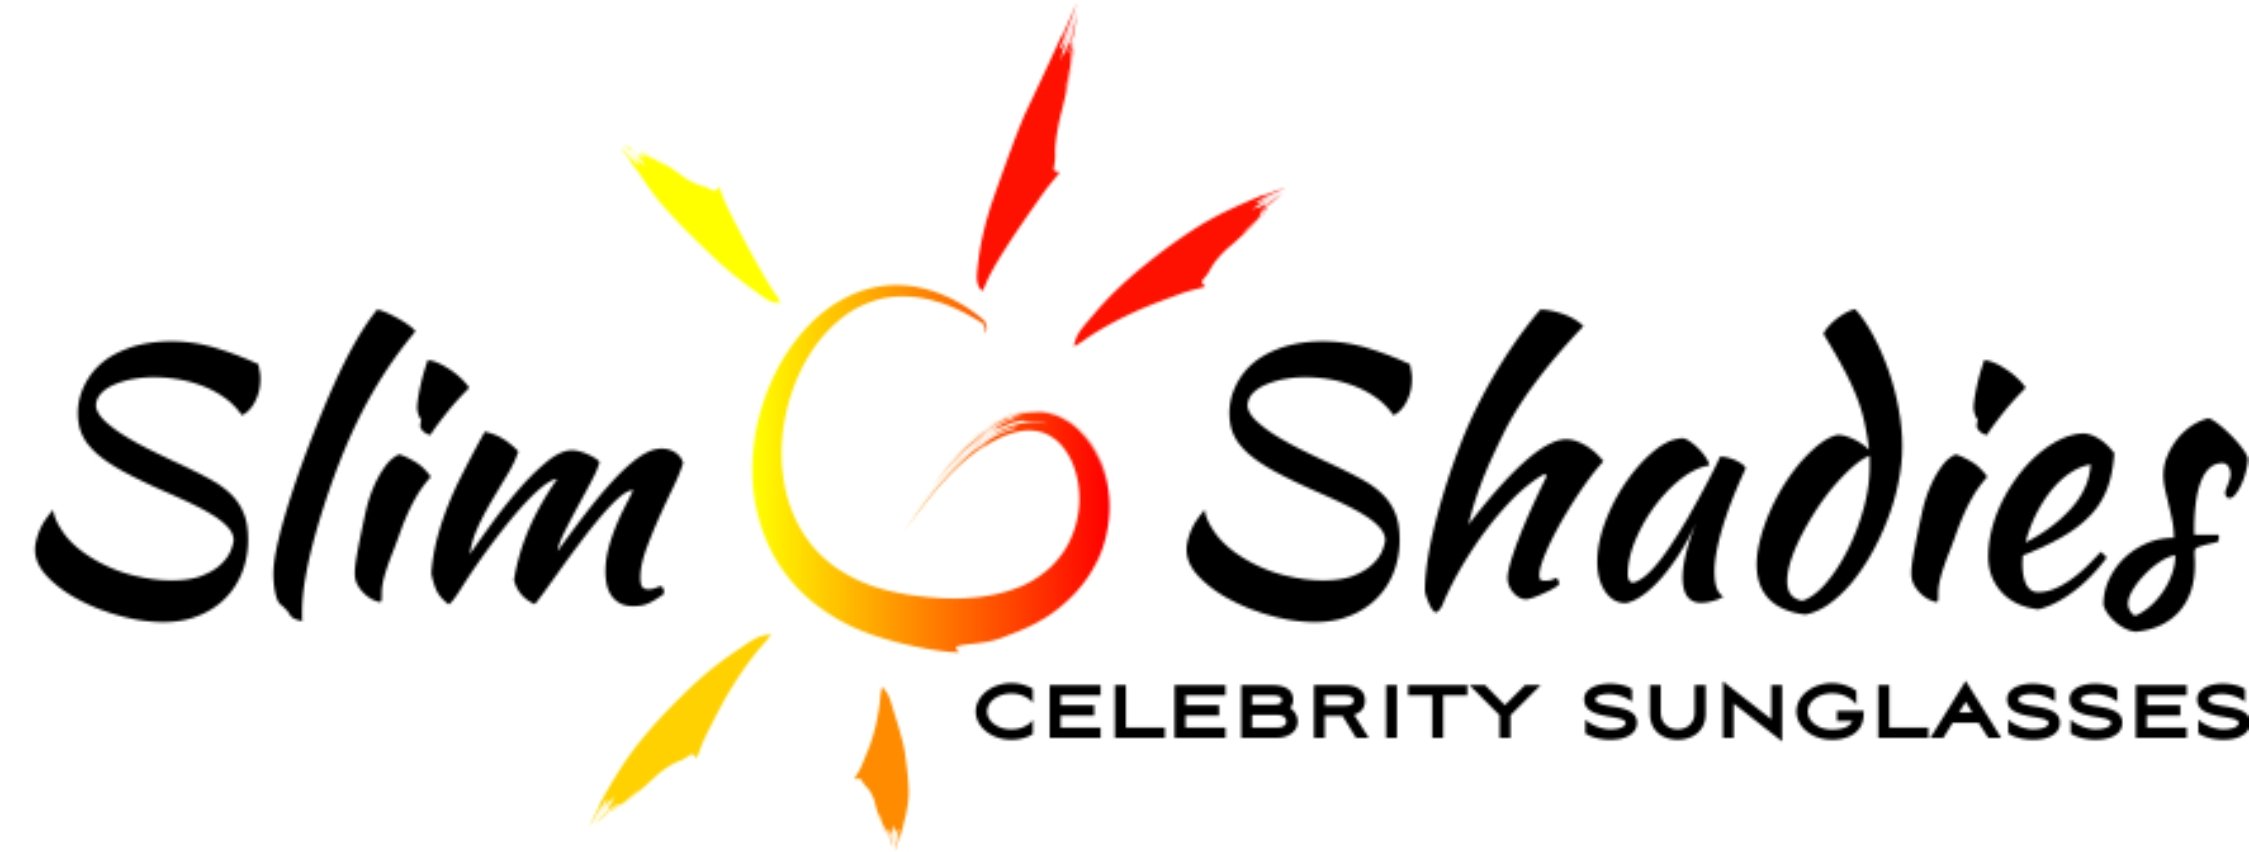 Slim Shadies Celebrity Sunglasses logo